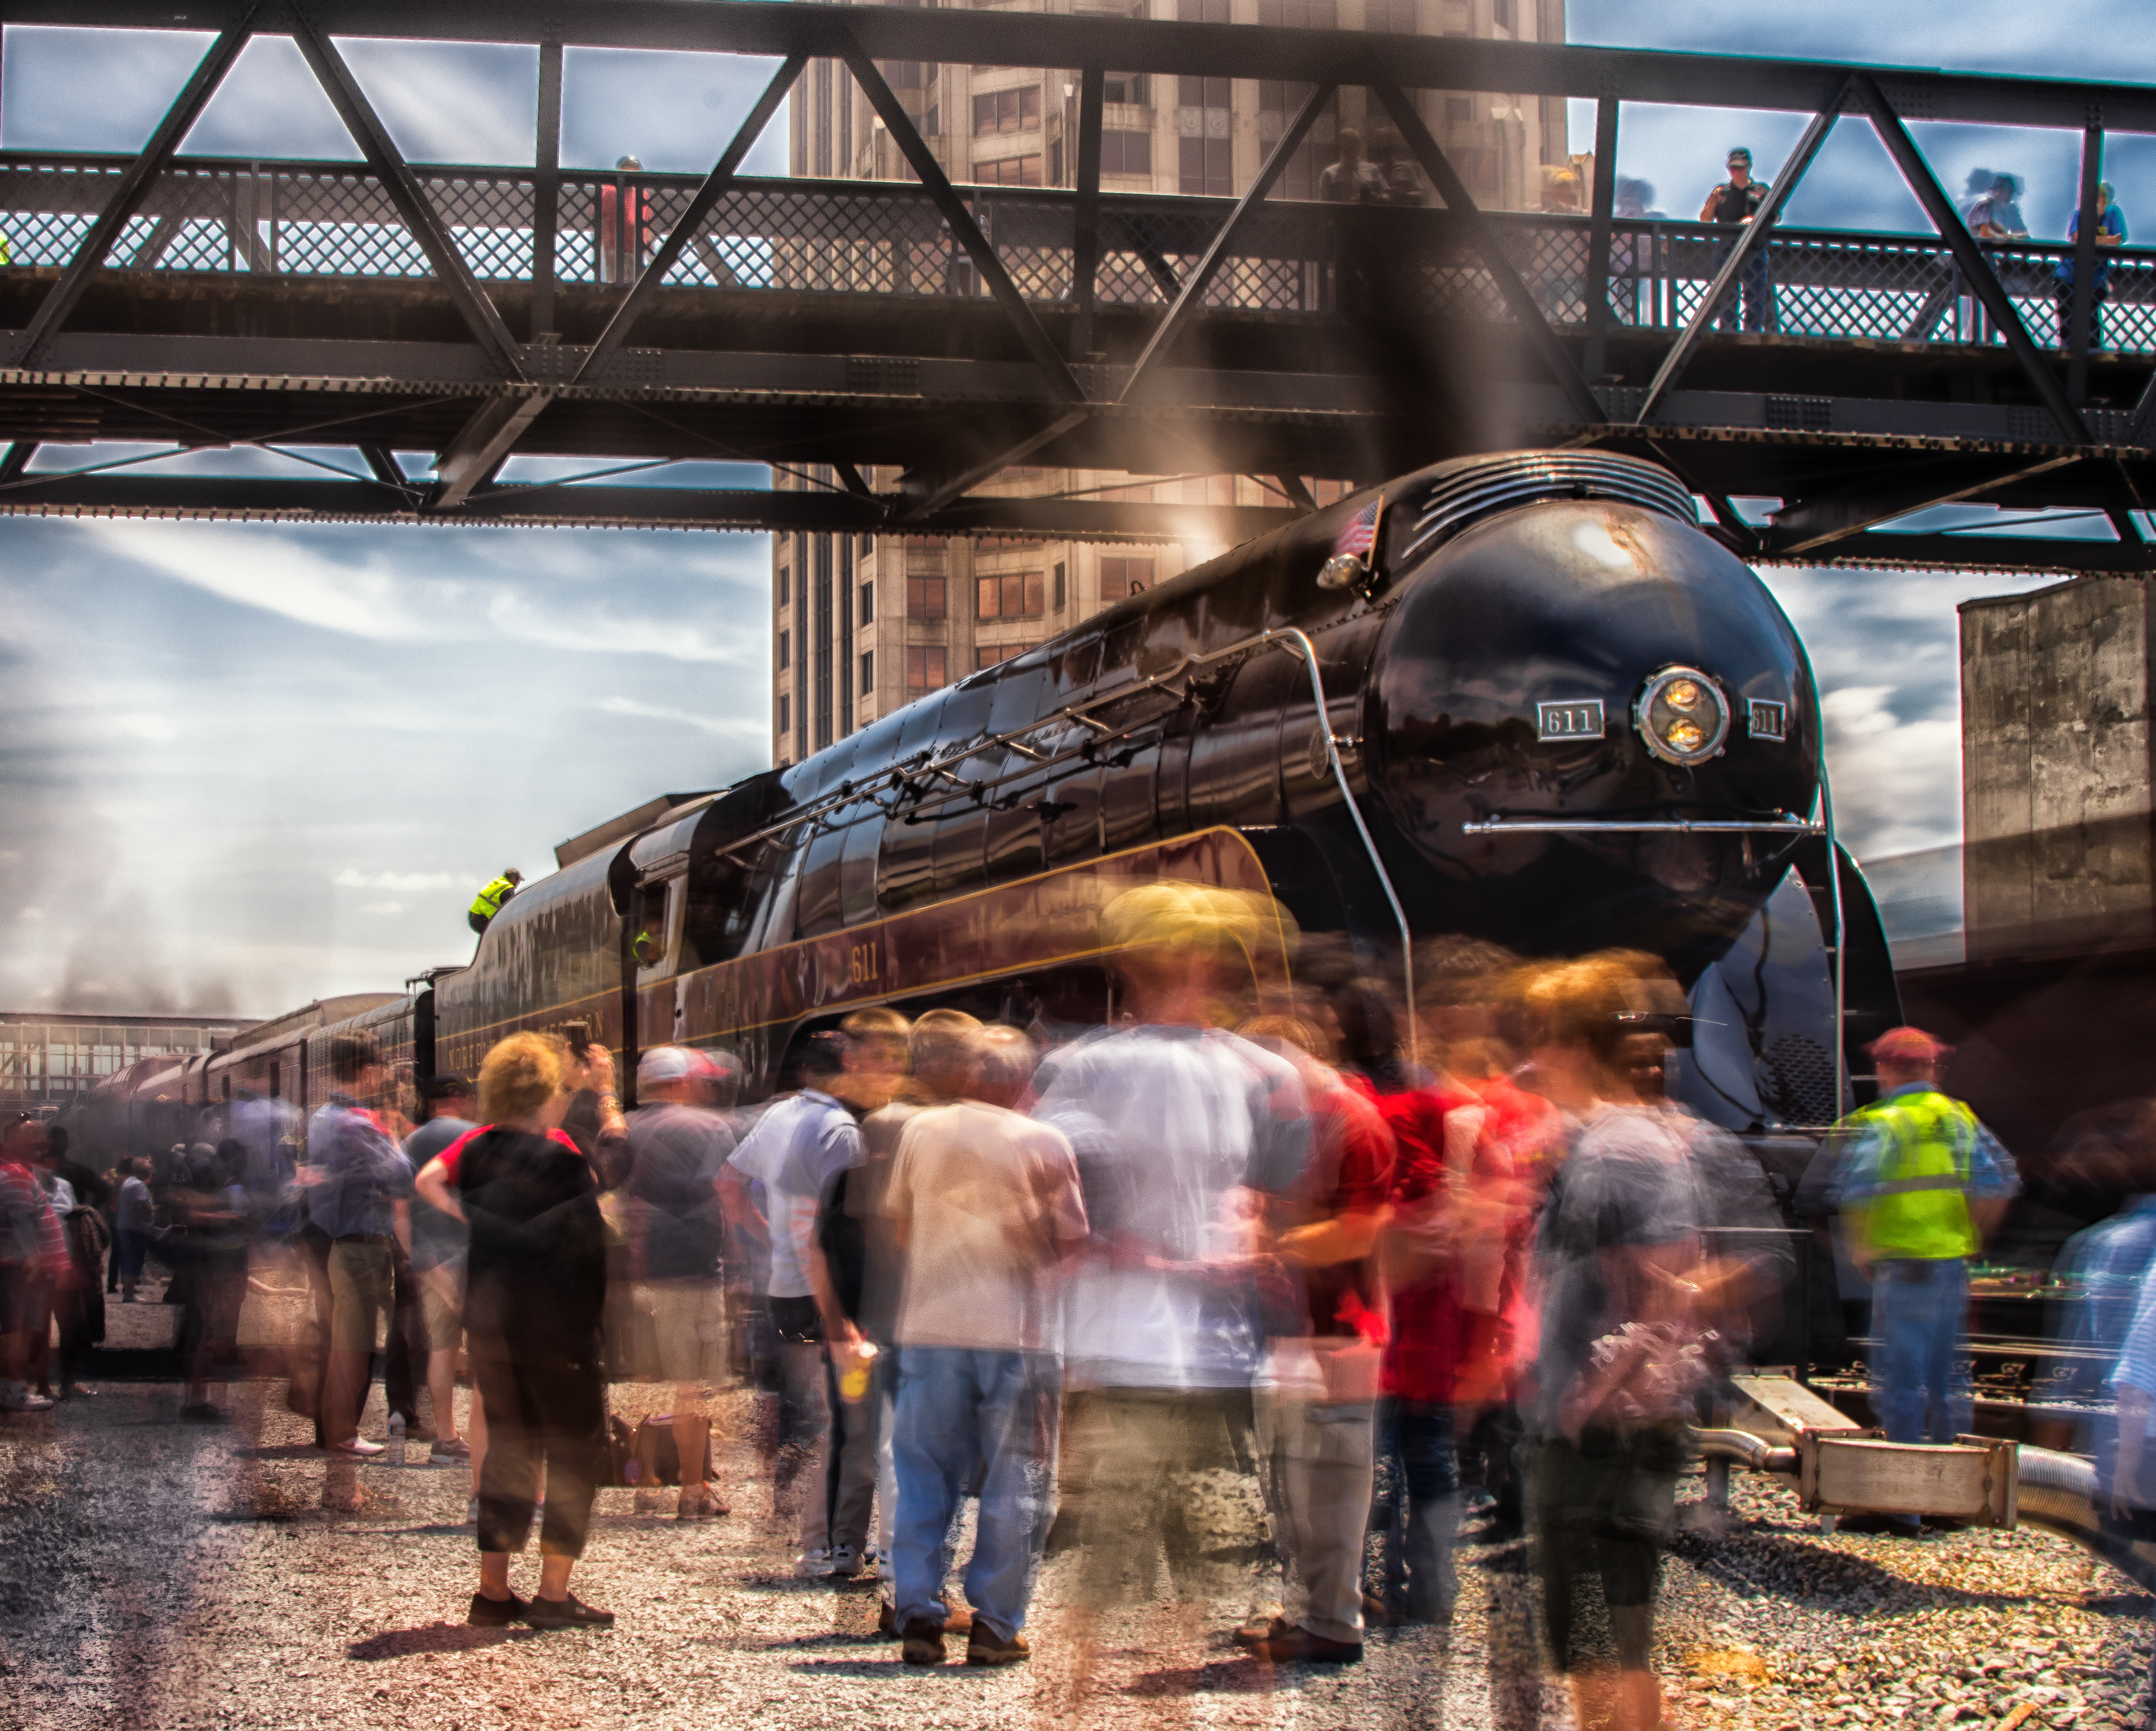 A crowd views a vintage locomotive